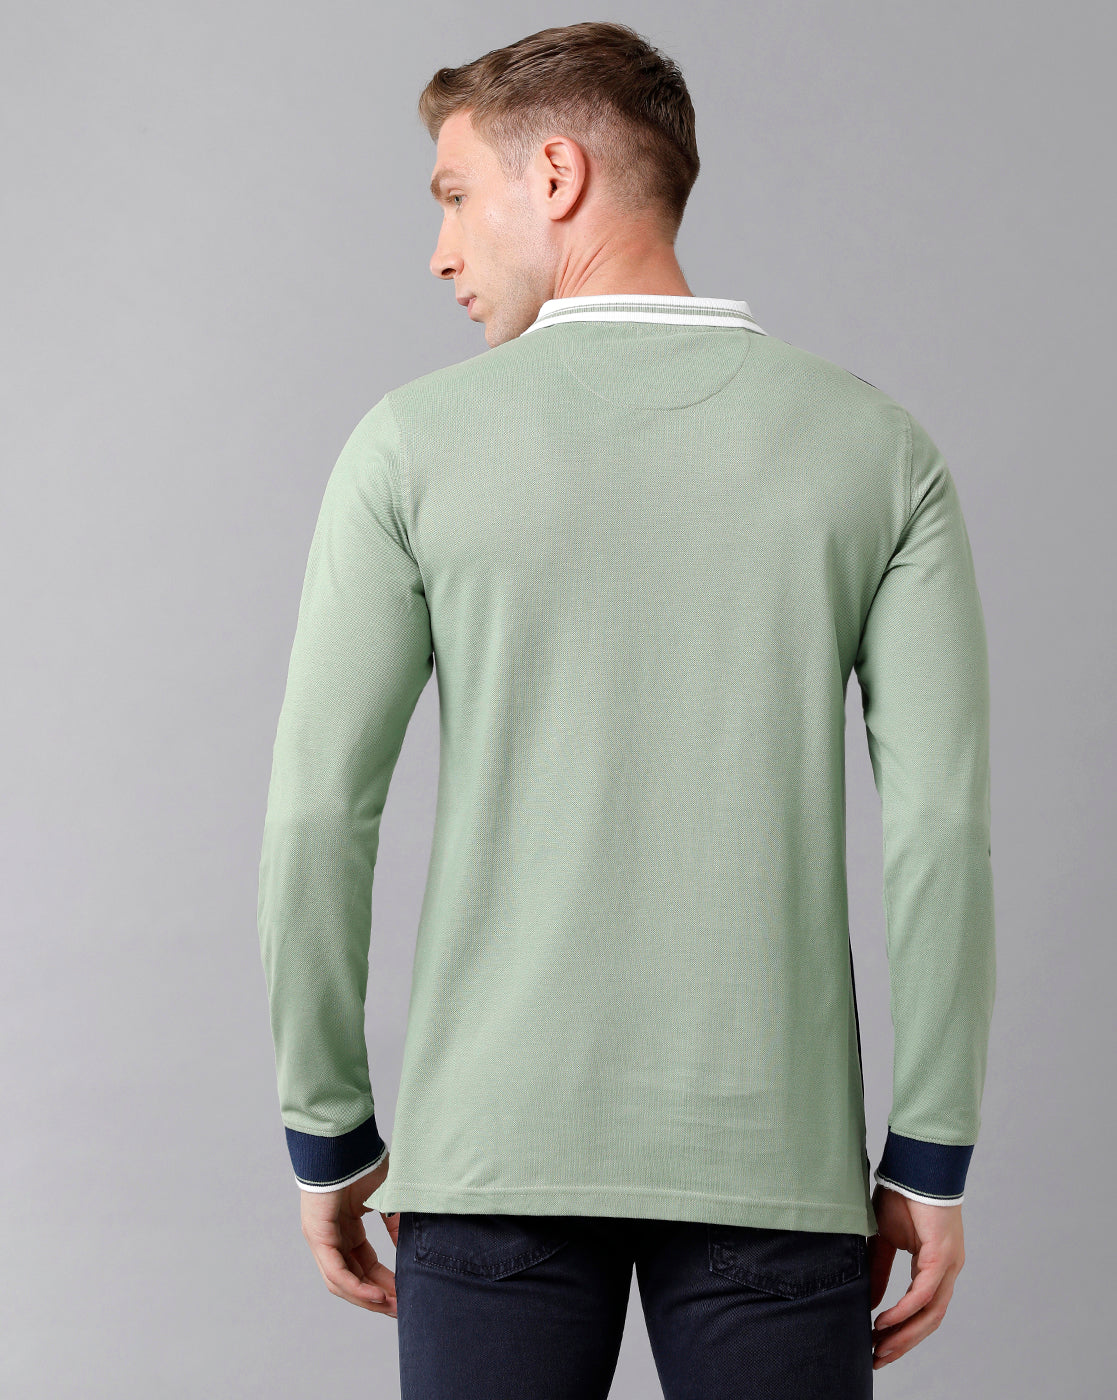 CP BRO Men's Cotton Color Block Full Sleeve Slim Fit Polo Neck Green Color T-Shirt | Brp Fs - 331 A